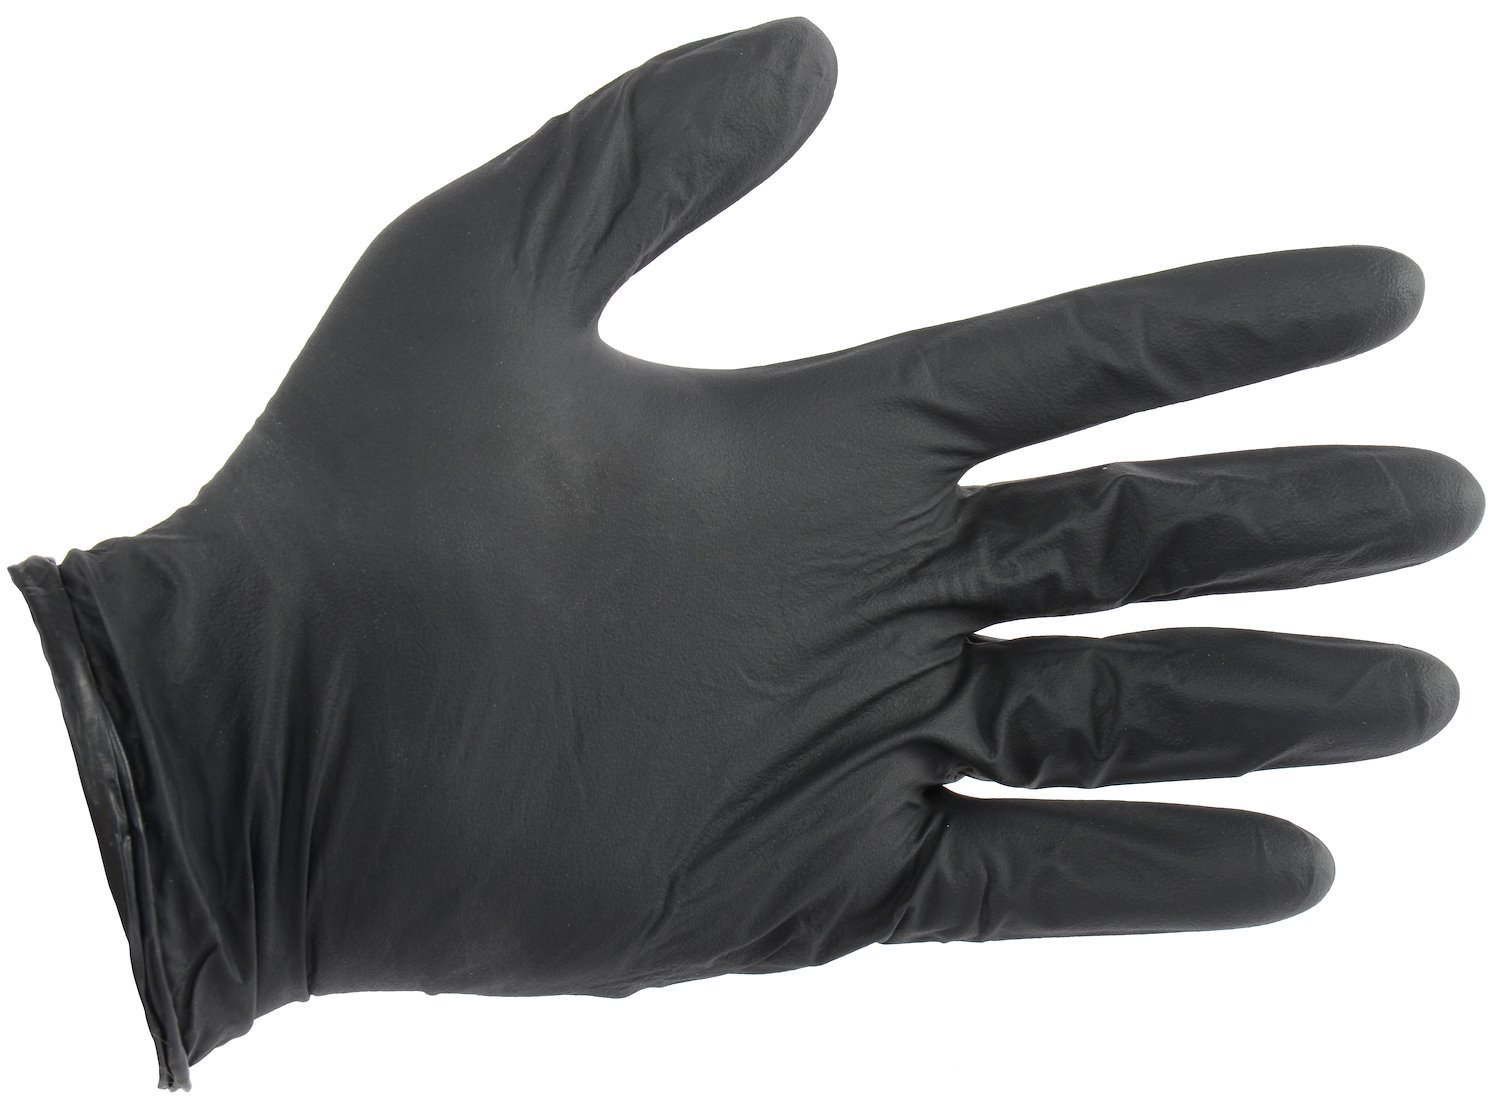 Industrial Nitrile Gloves [5.5 mils Thick, Medium]